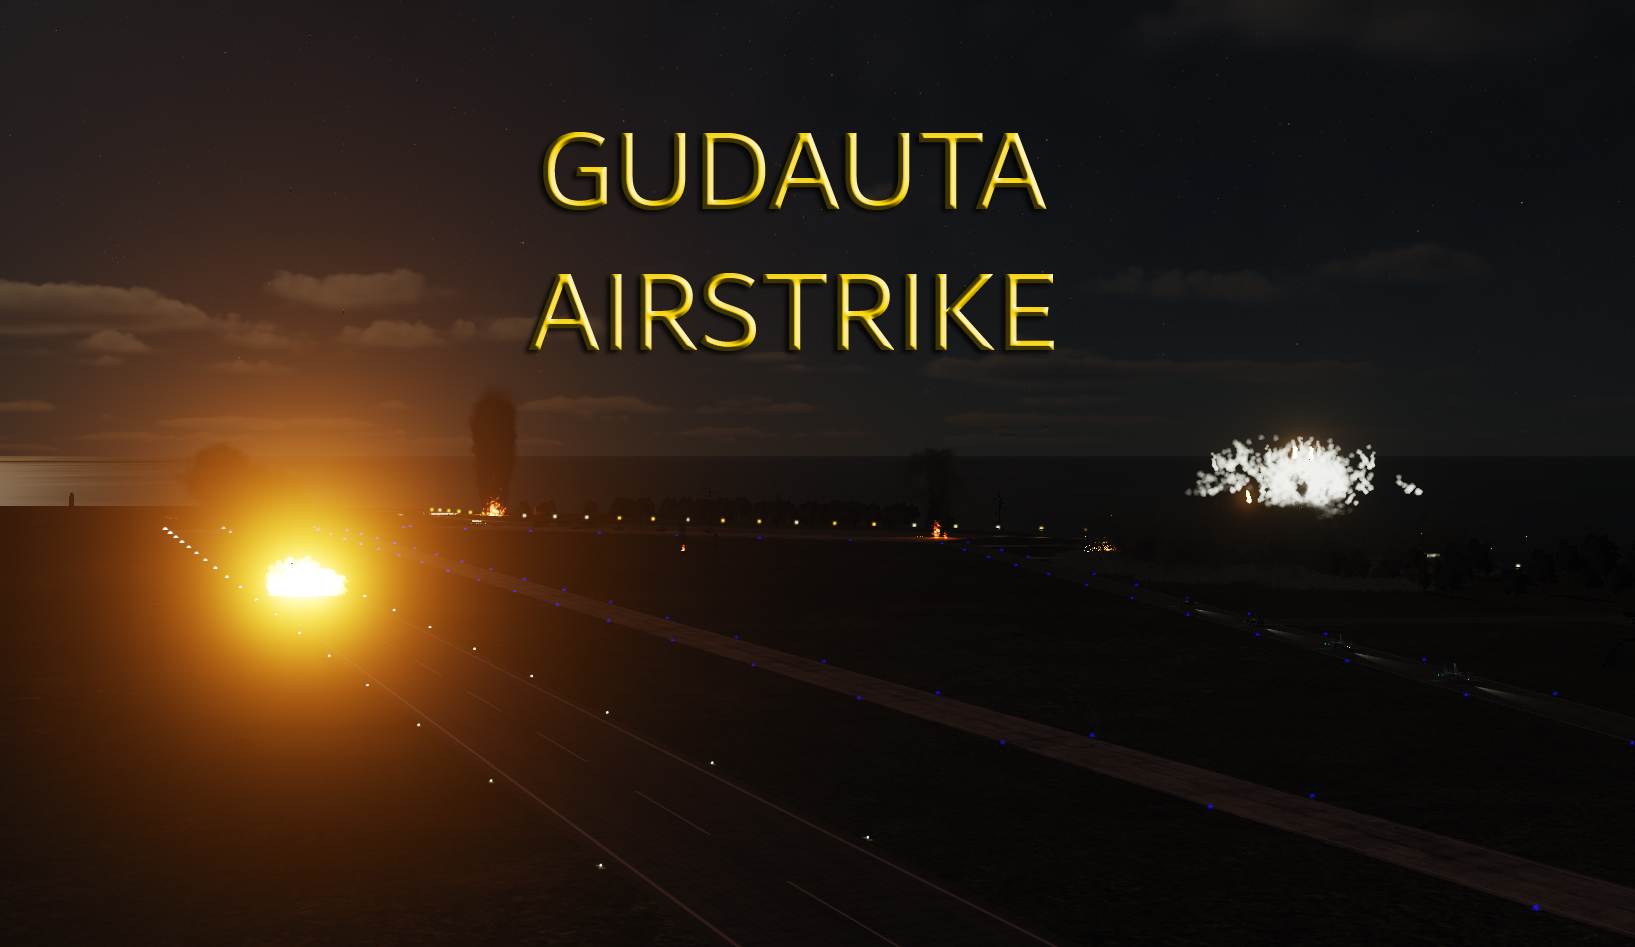 Gudauta Airstrike